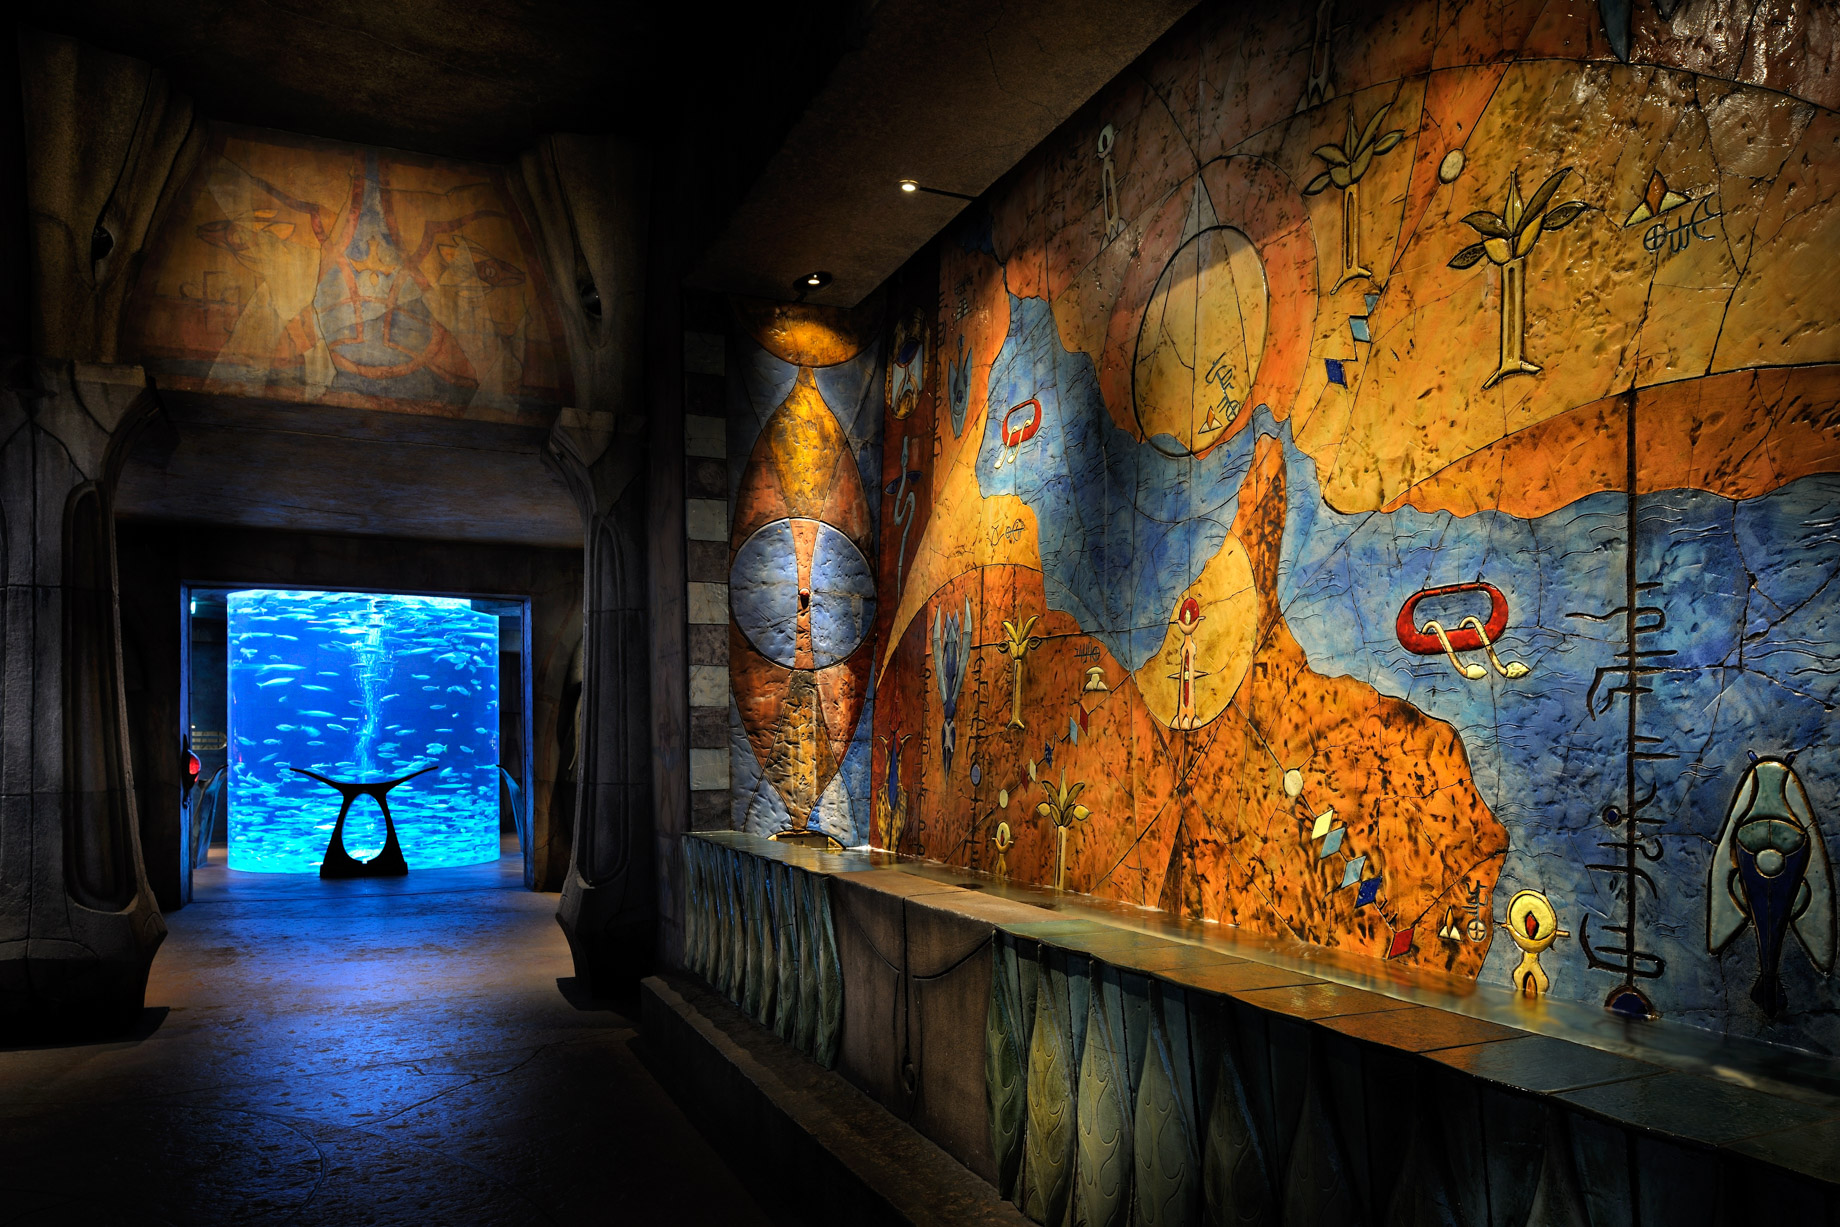 Atlantis The Palm Resort – Crescent Rd, Dubai, UAE – Lost Chamber Aquarium Entry Portal